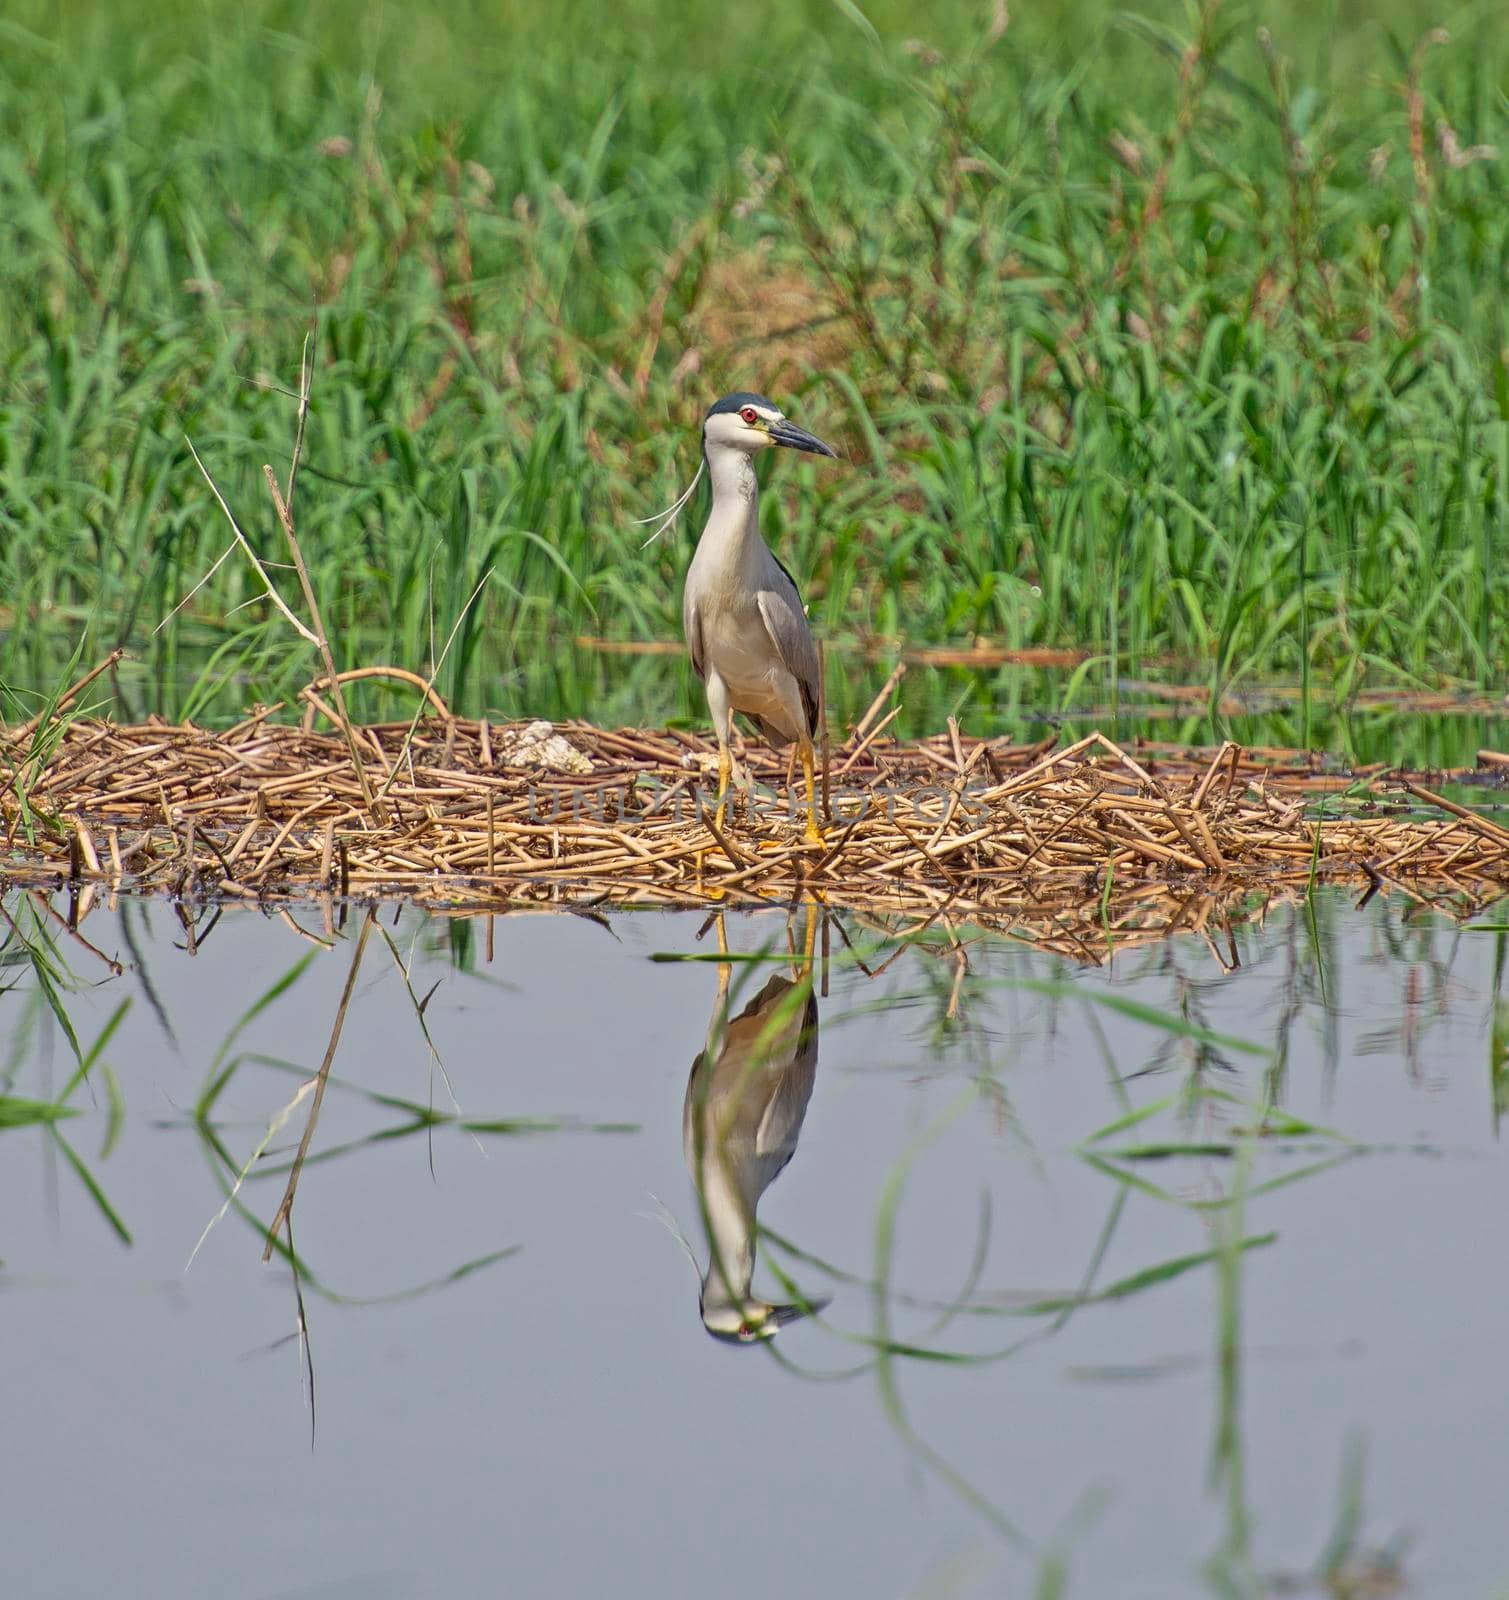 Black-crown night heron stood in grass reeds by river bank by paulvinten